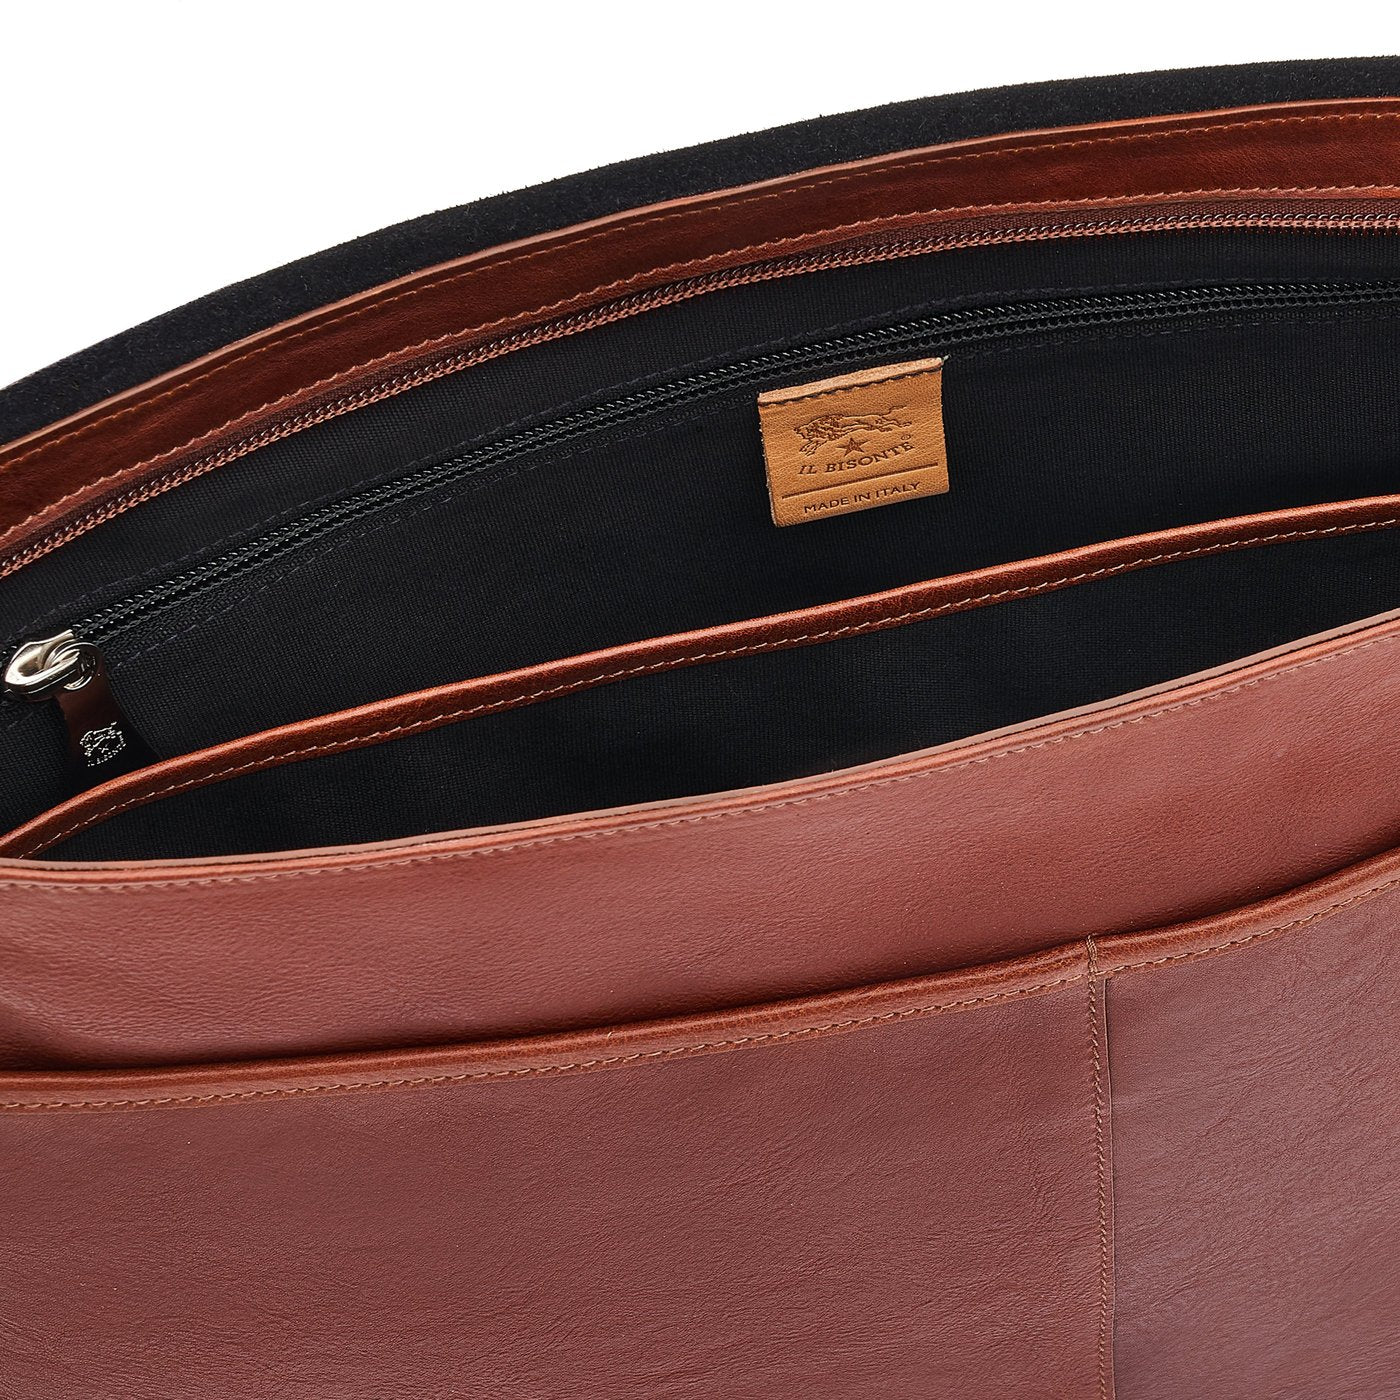 Brolio | Men's messenger in vintage leather color sepia